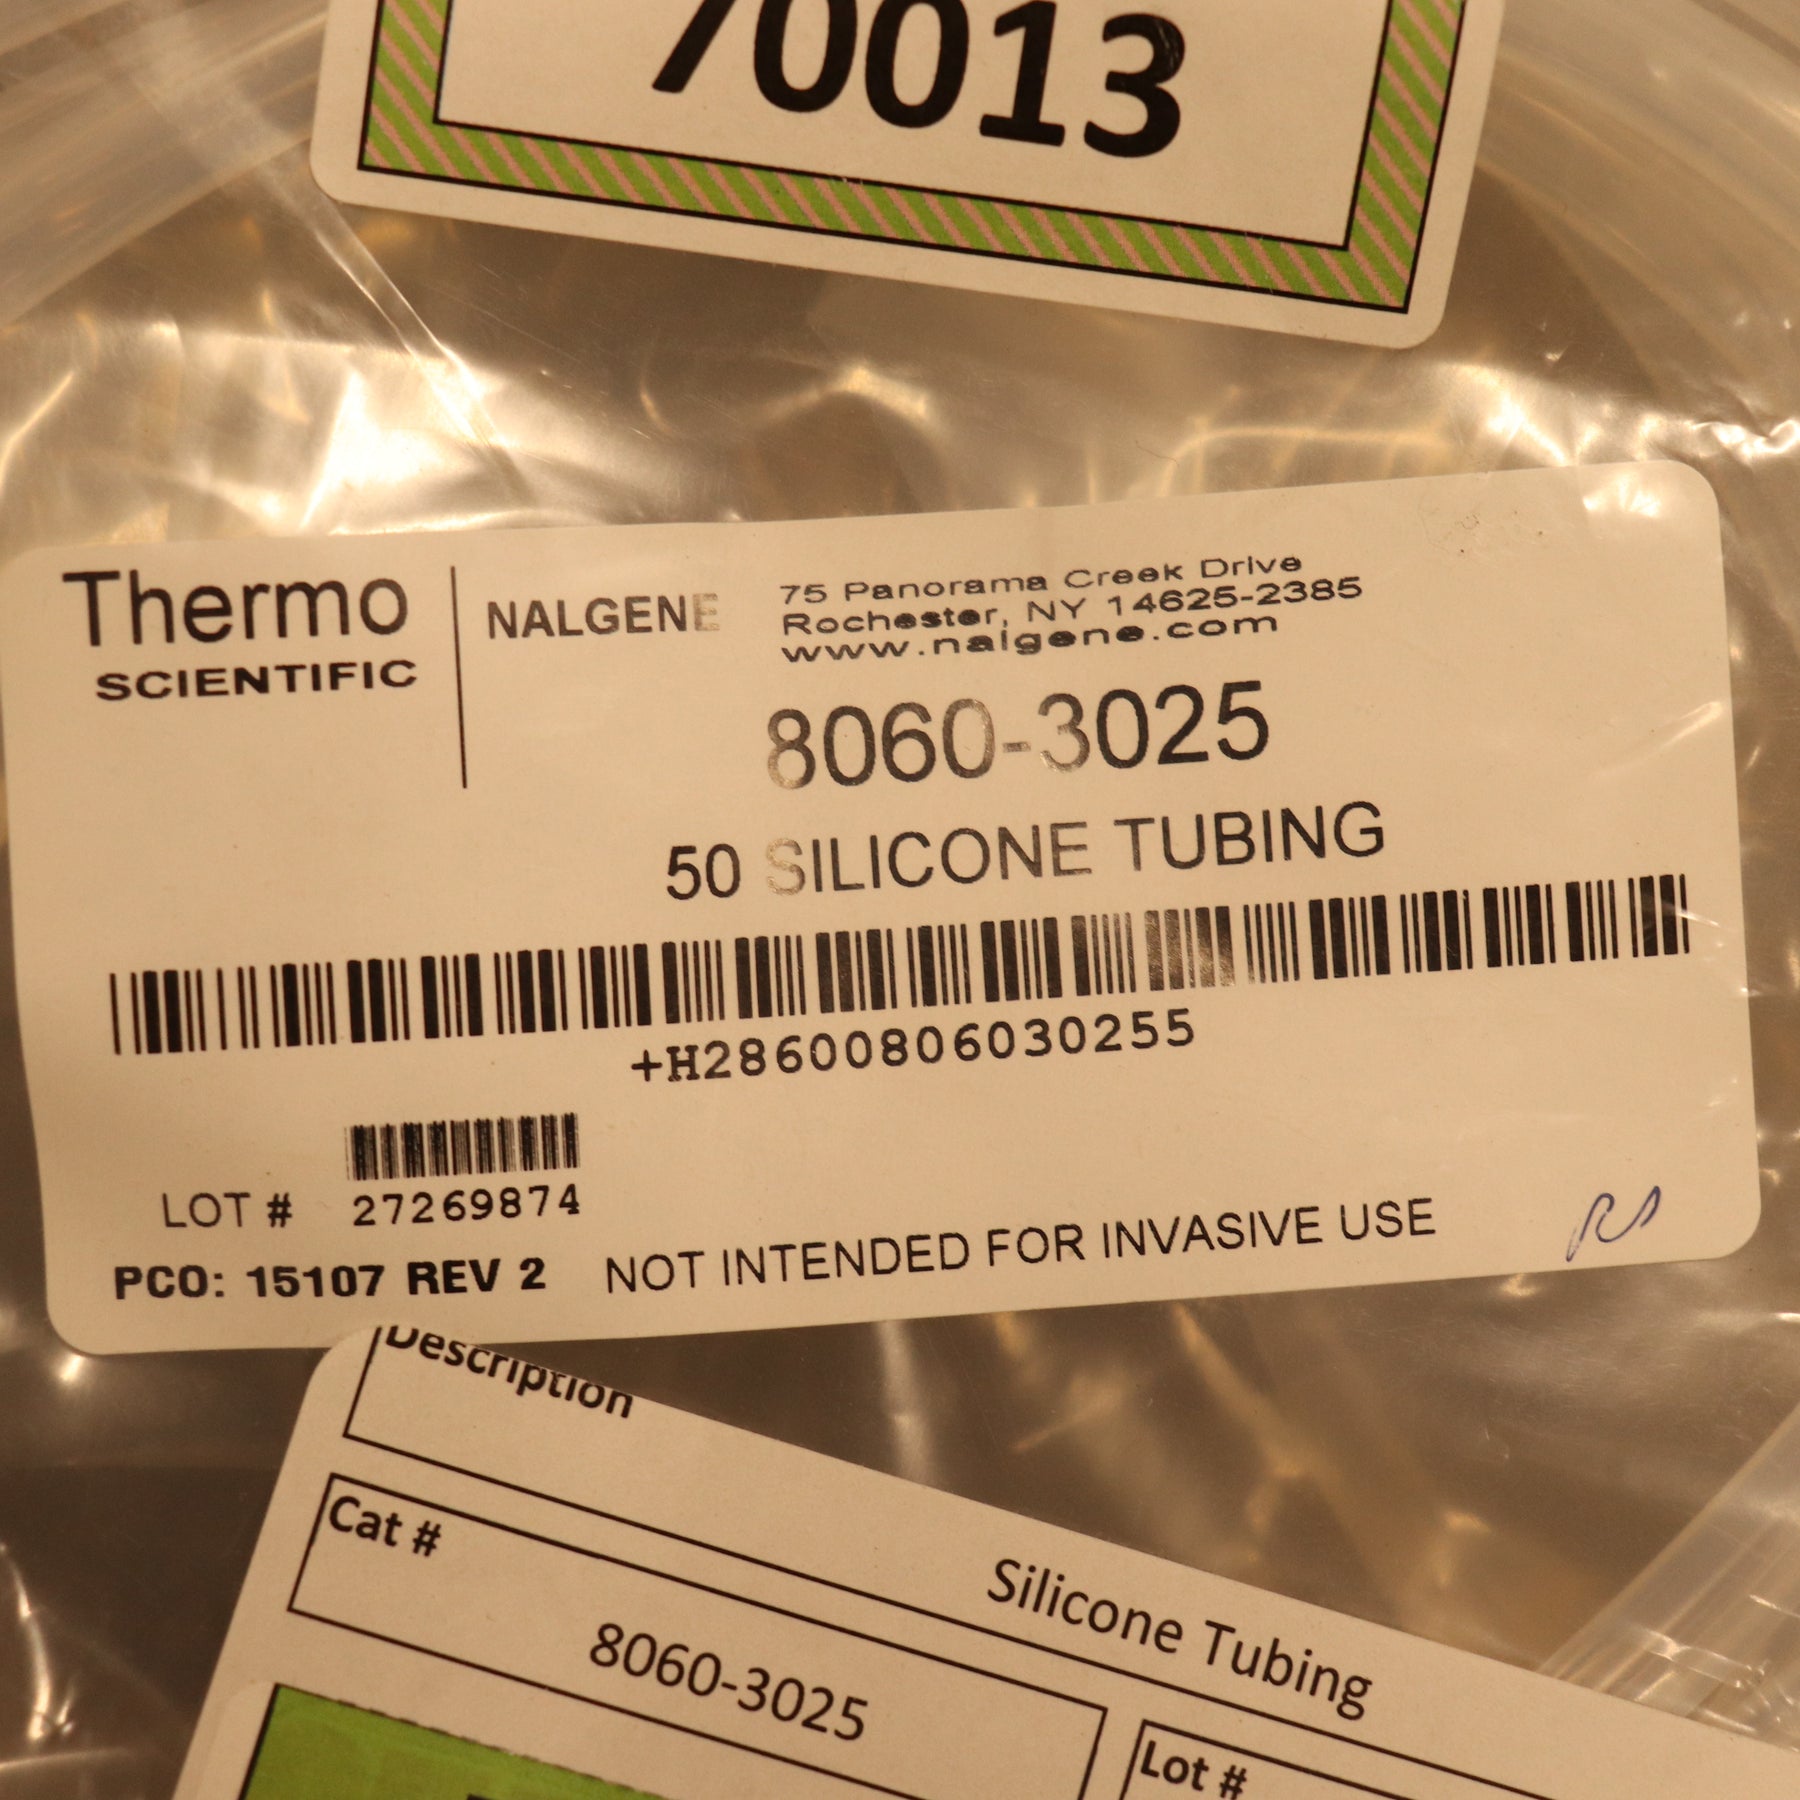 Thermo Scientific Nalgene 50 Platinum-Cured Silicone Tubing 8060-3025